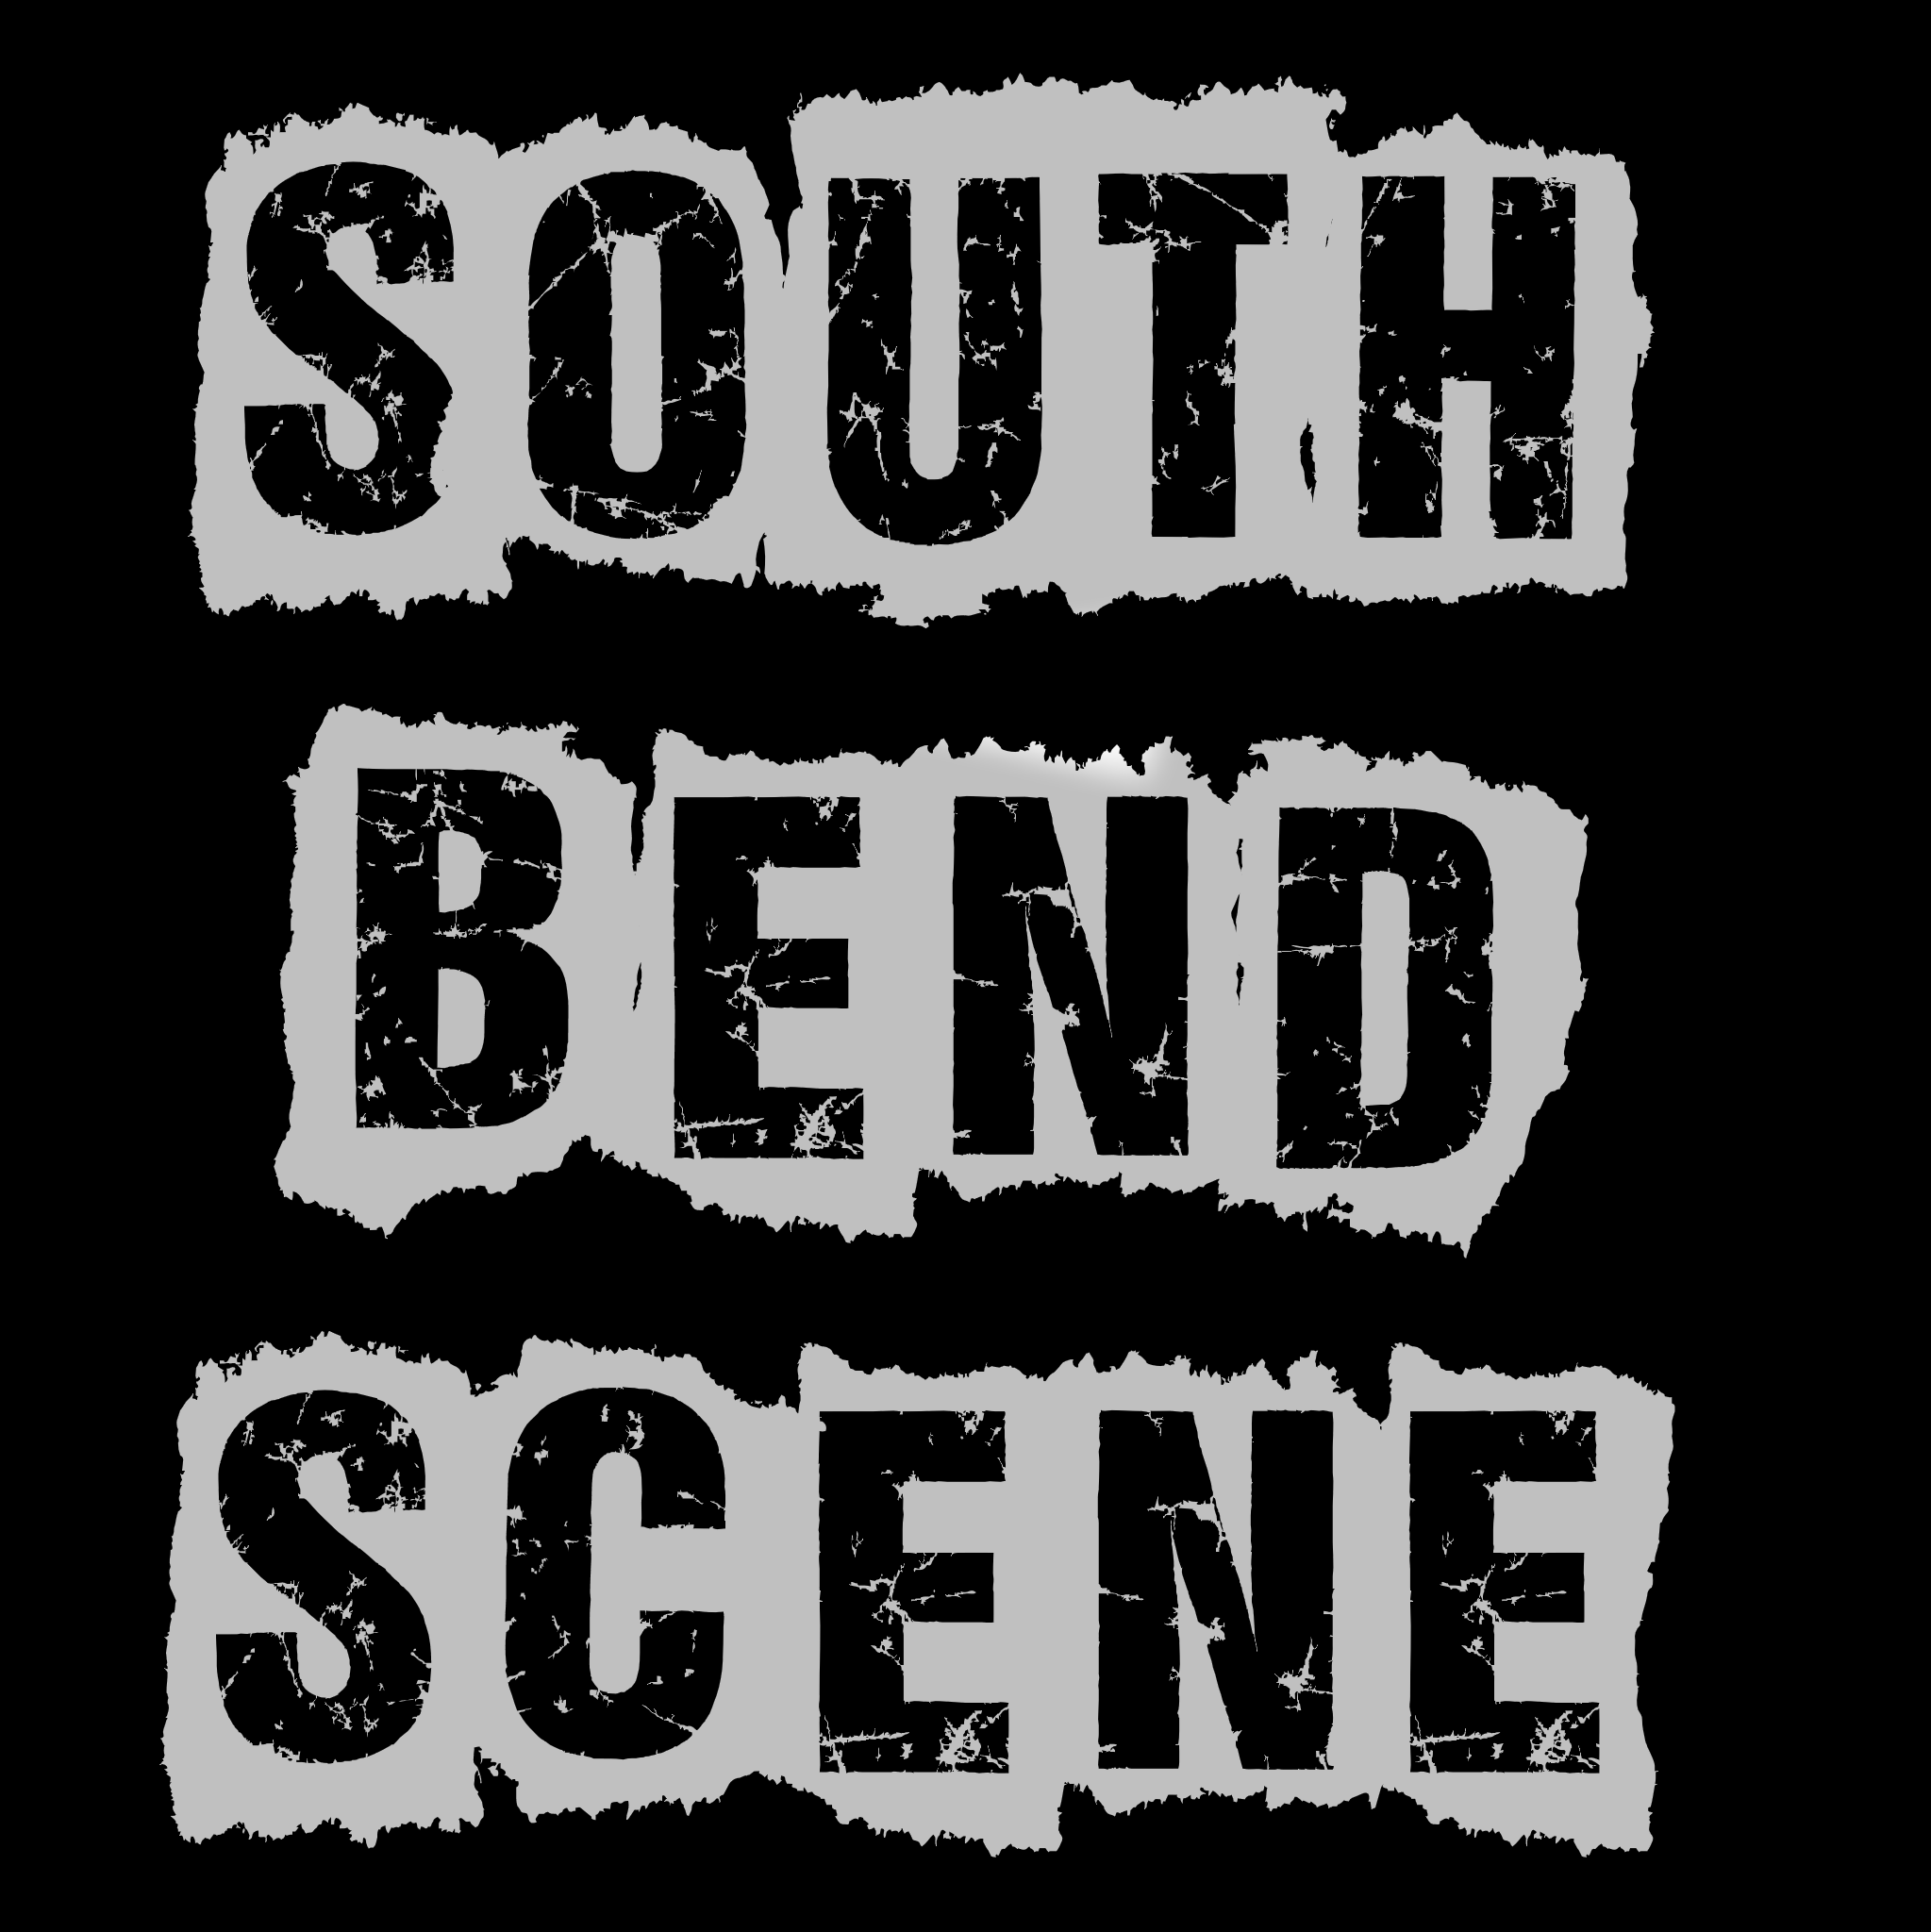 South Bend Scene